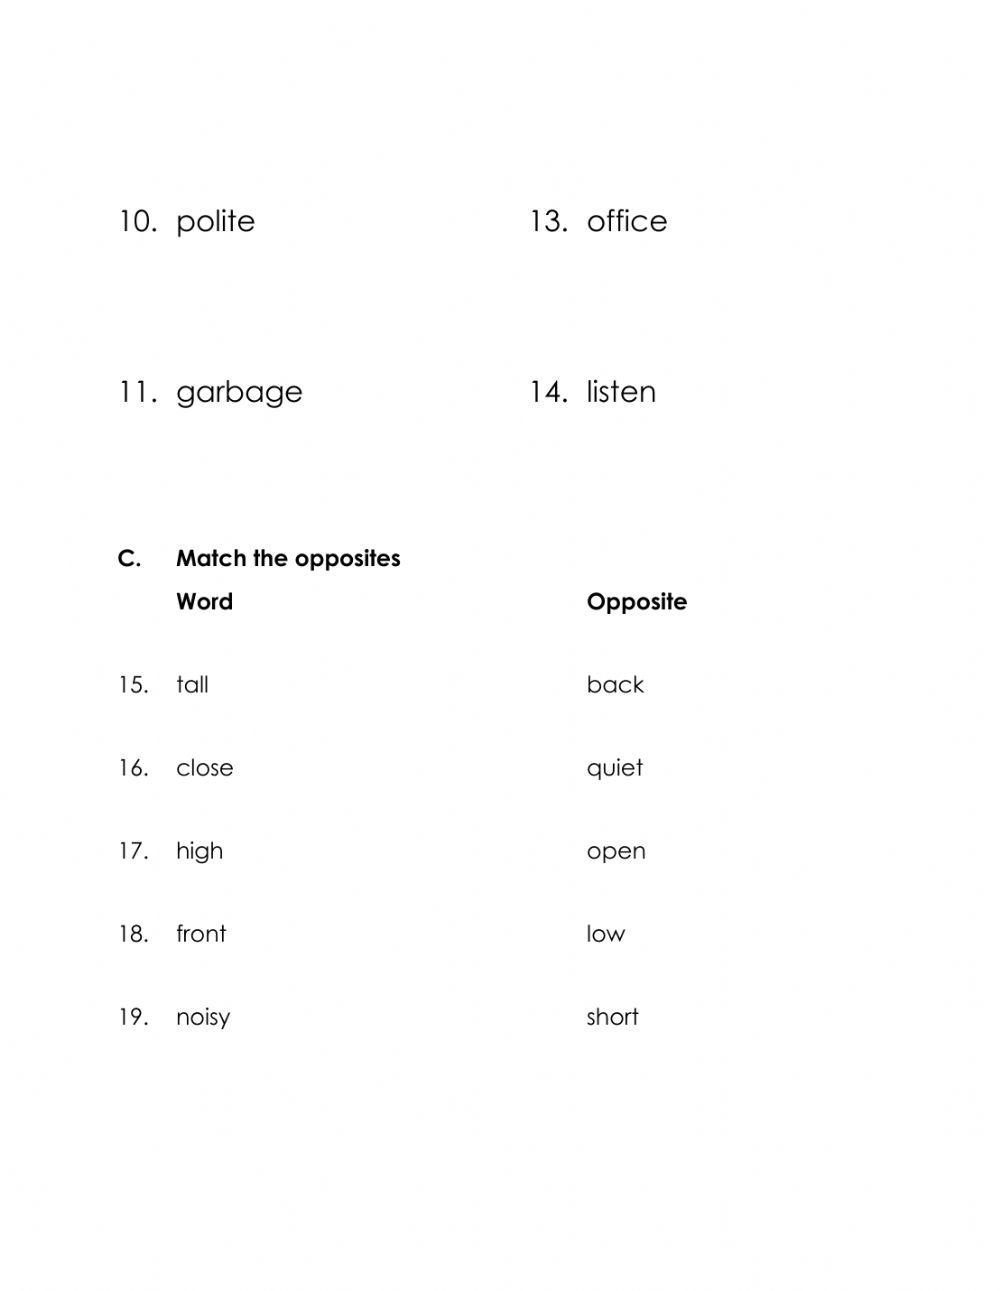 Spelling & Vocabulary